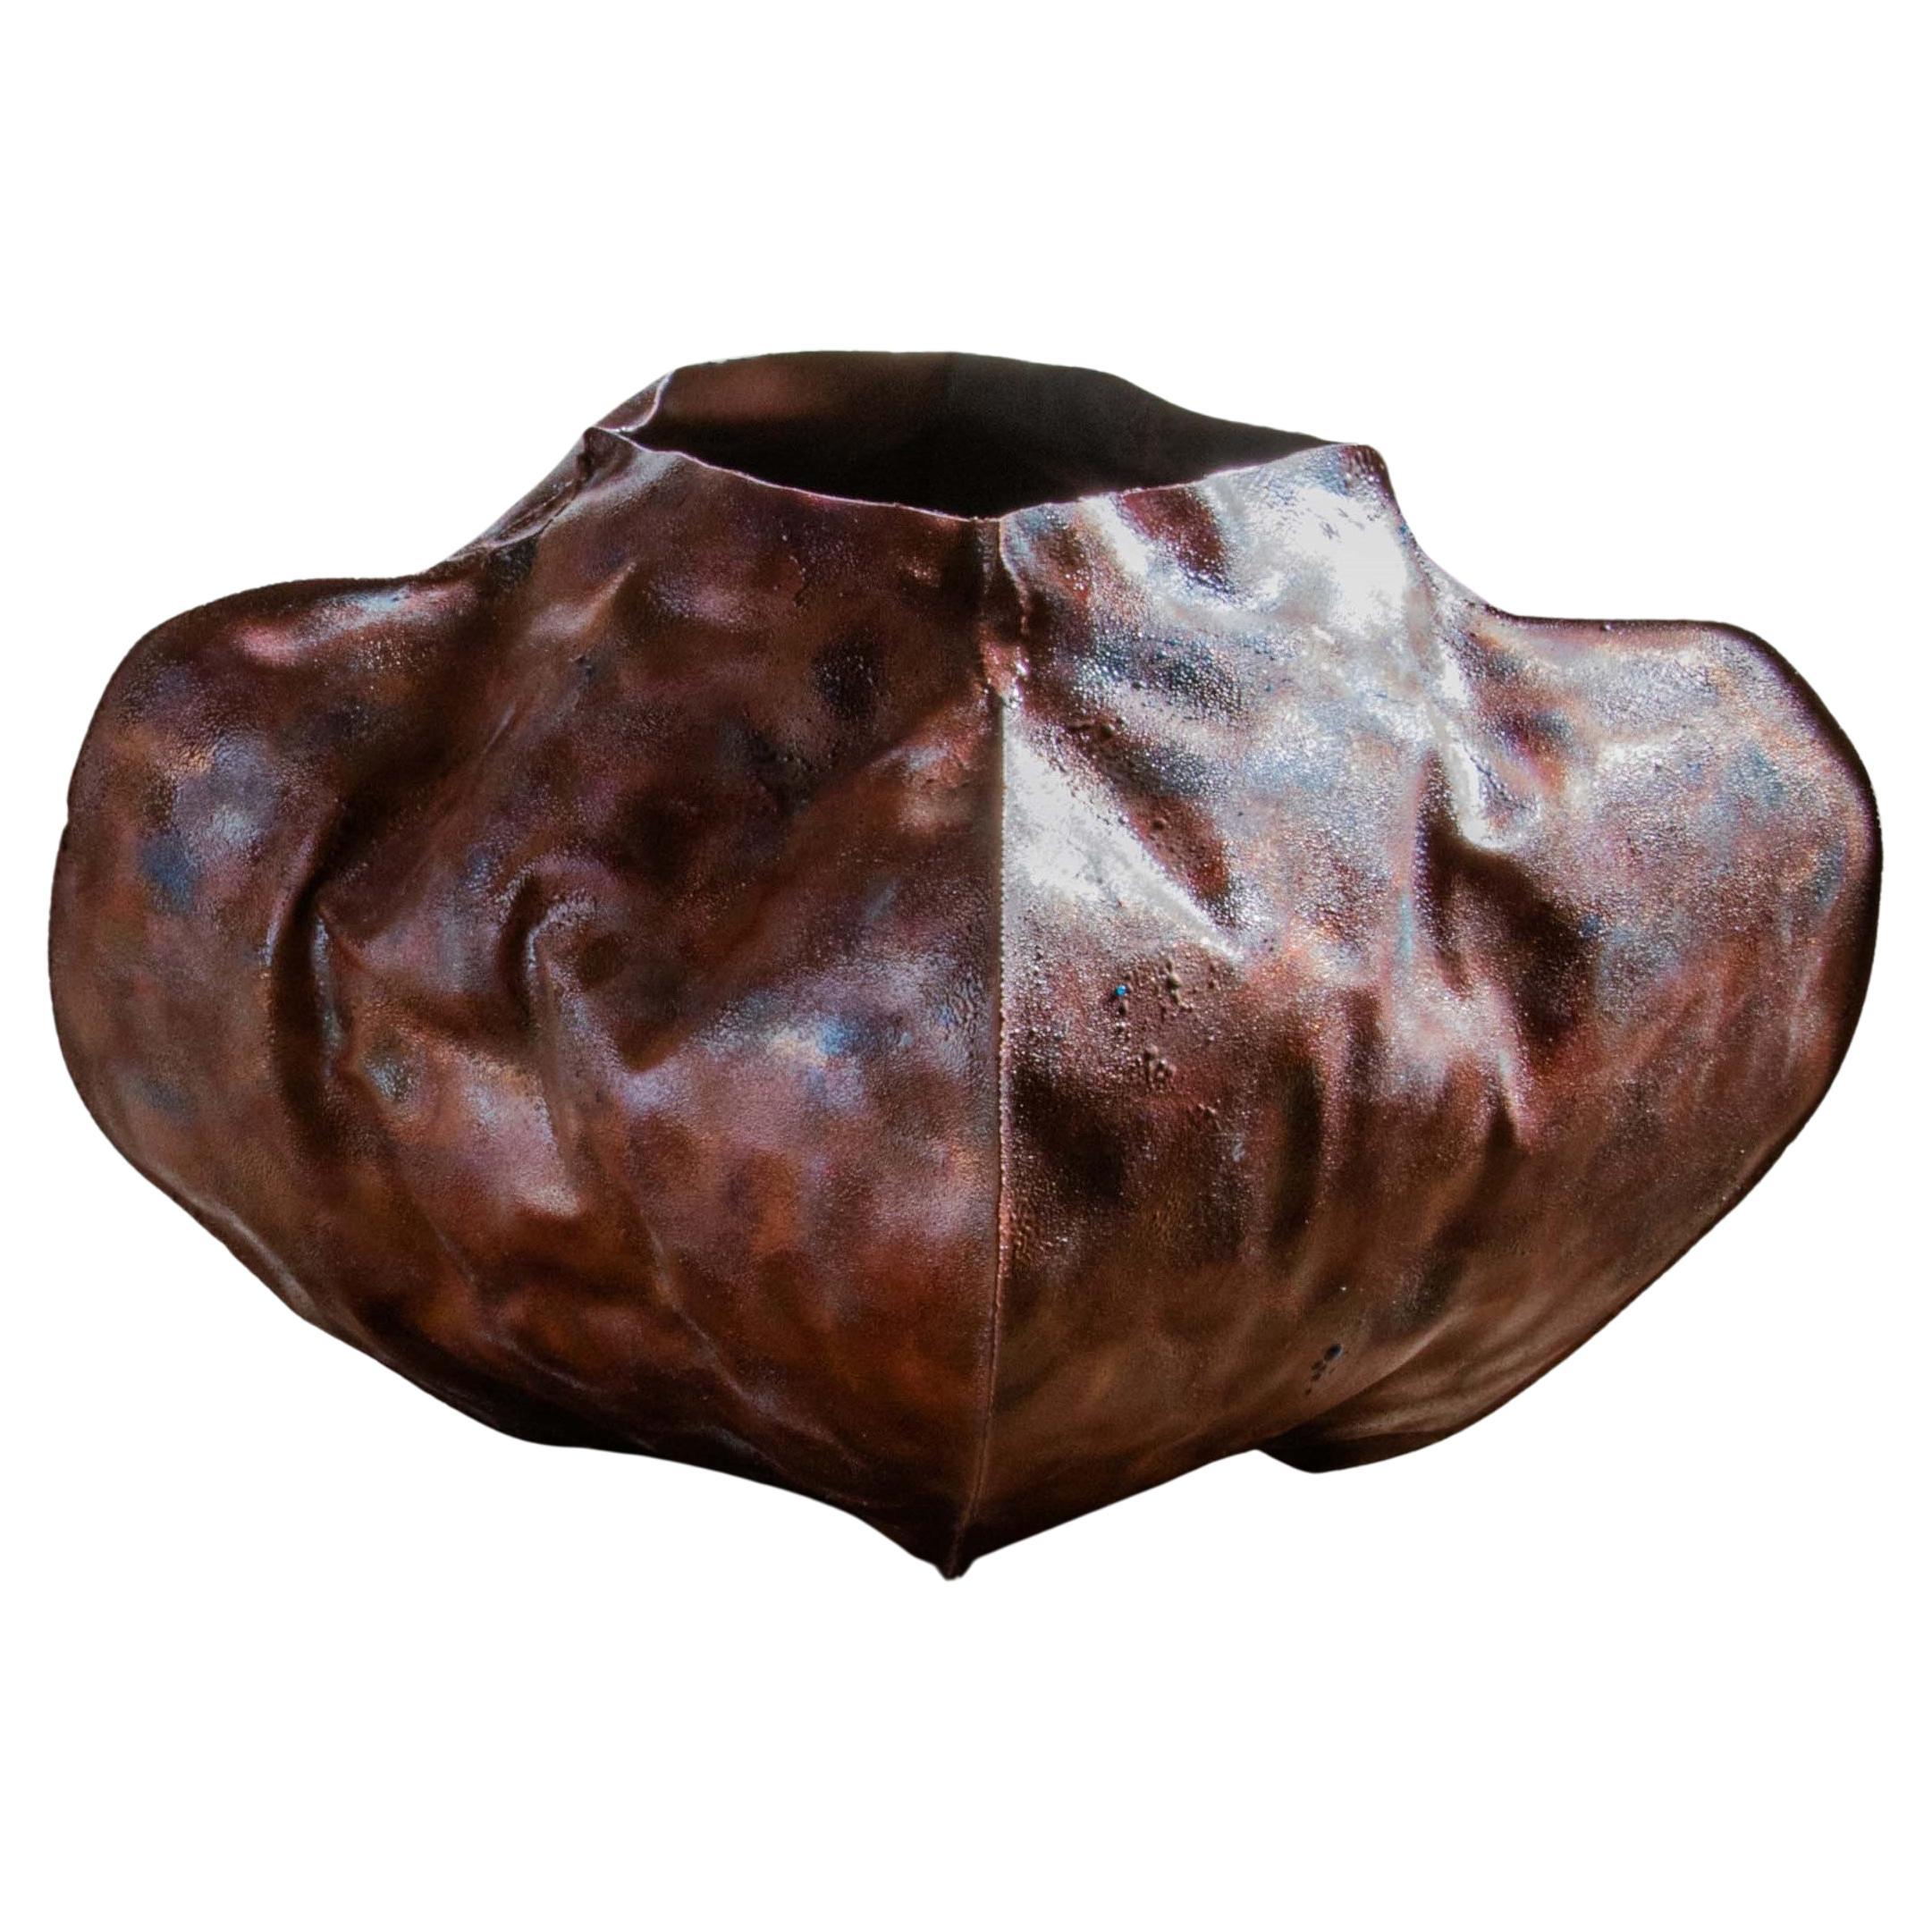 Contemporary Japanese Cloissoné Copper Vessel Shippo Vase by Yochiya Studio For Sale